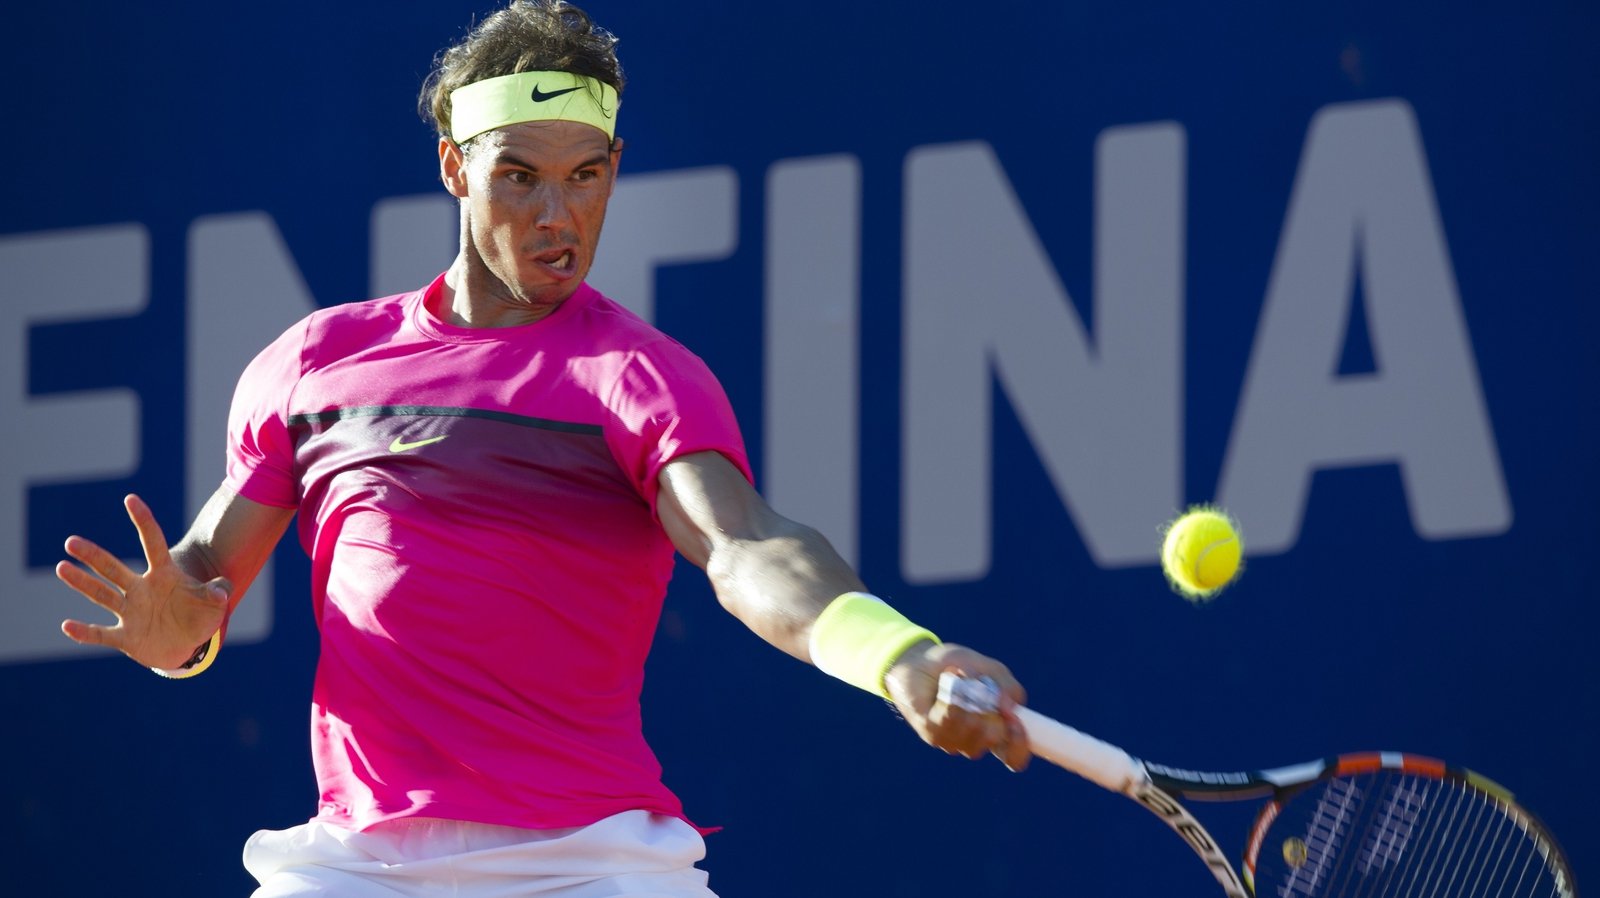 Rafa Nadal equals clay-court title mark